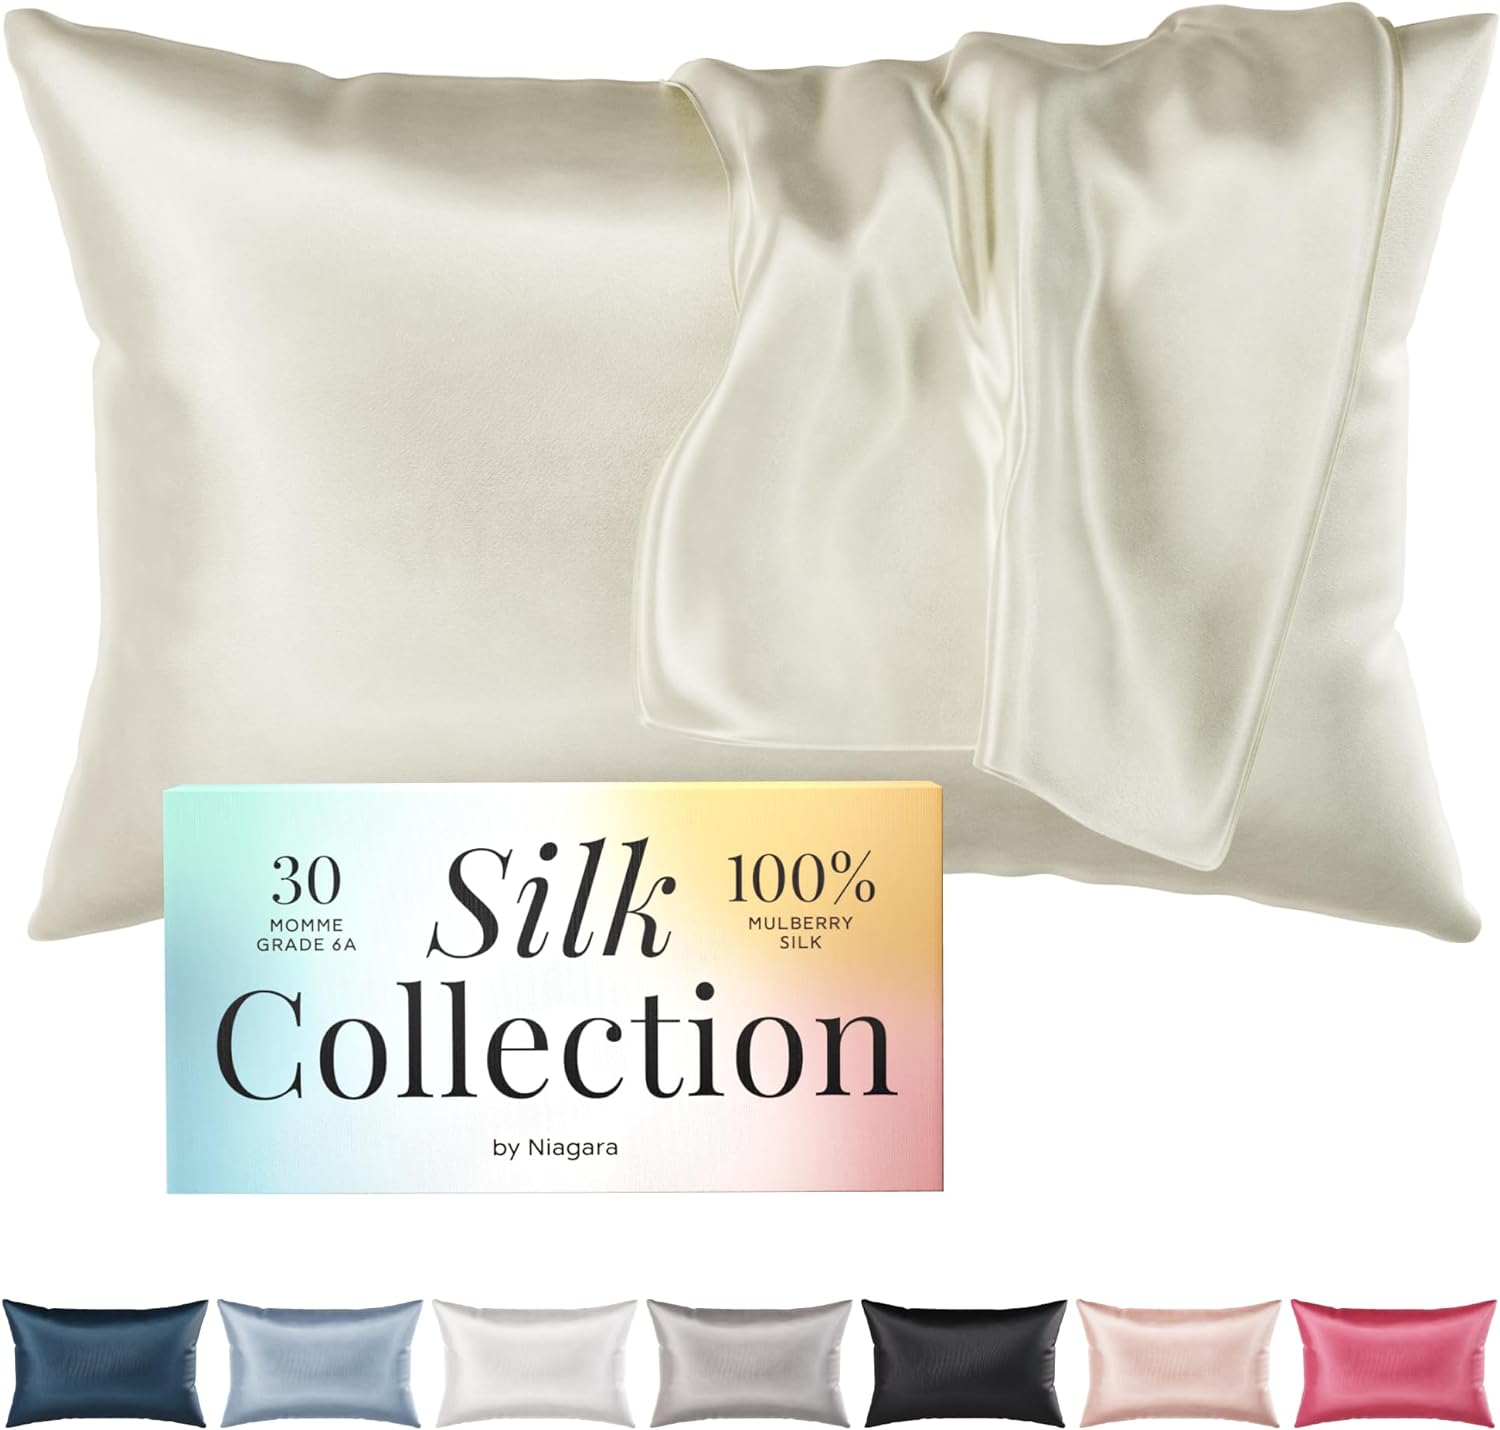 Niagara 100% Mulberry Silk Pillowcase - 30 Momme Silk Pillow case for Hair and Skin - Grade 6A Silk Pillow Cases with Zipper - Soft & Cooling Beige Silk Pillowcase Queen Size (20x30)